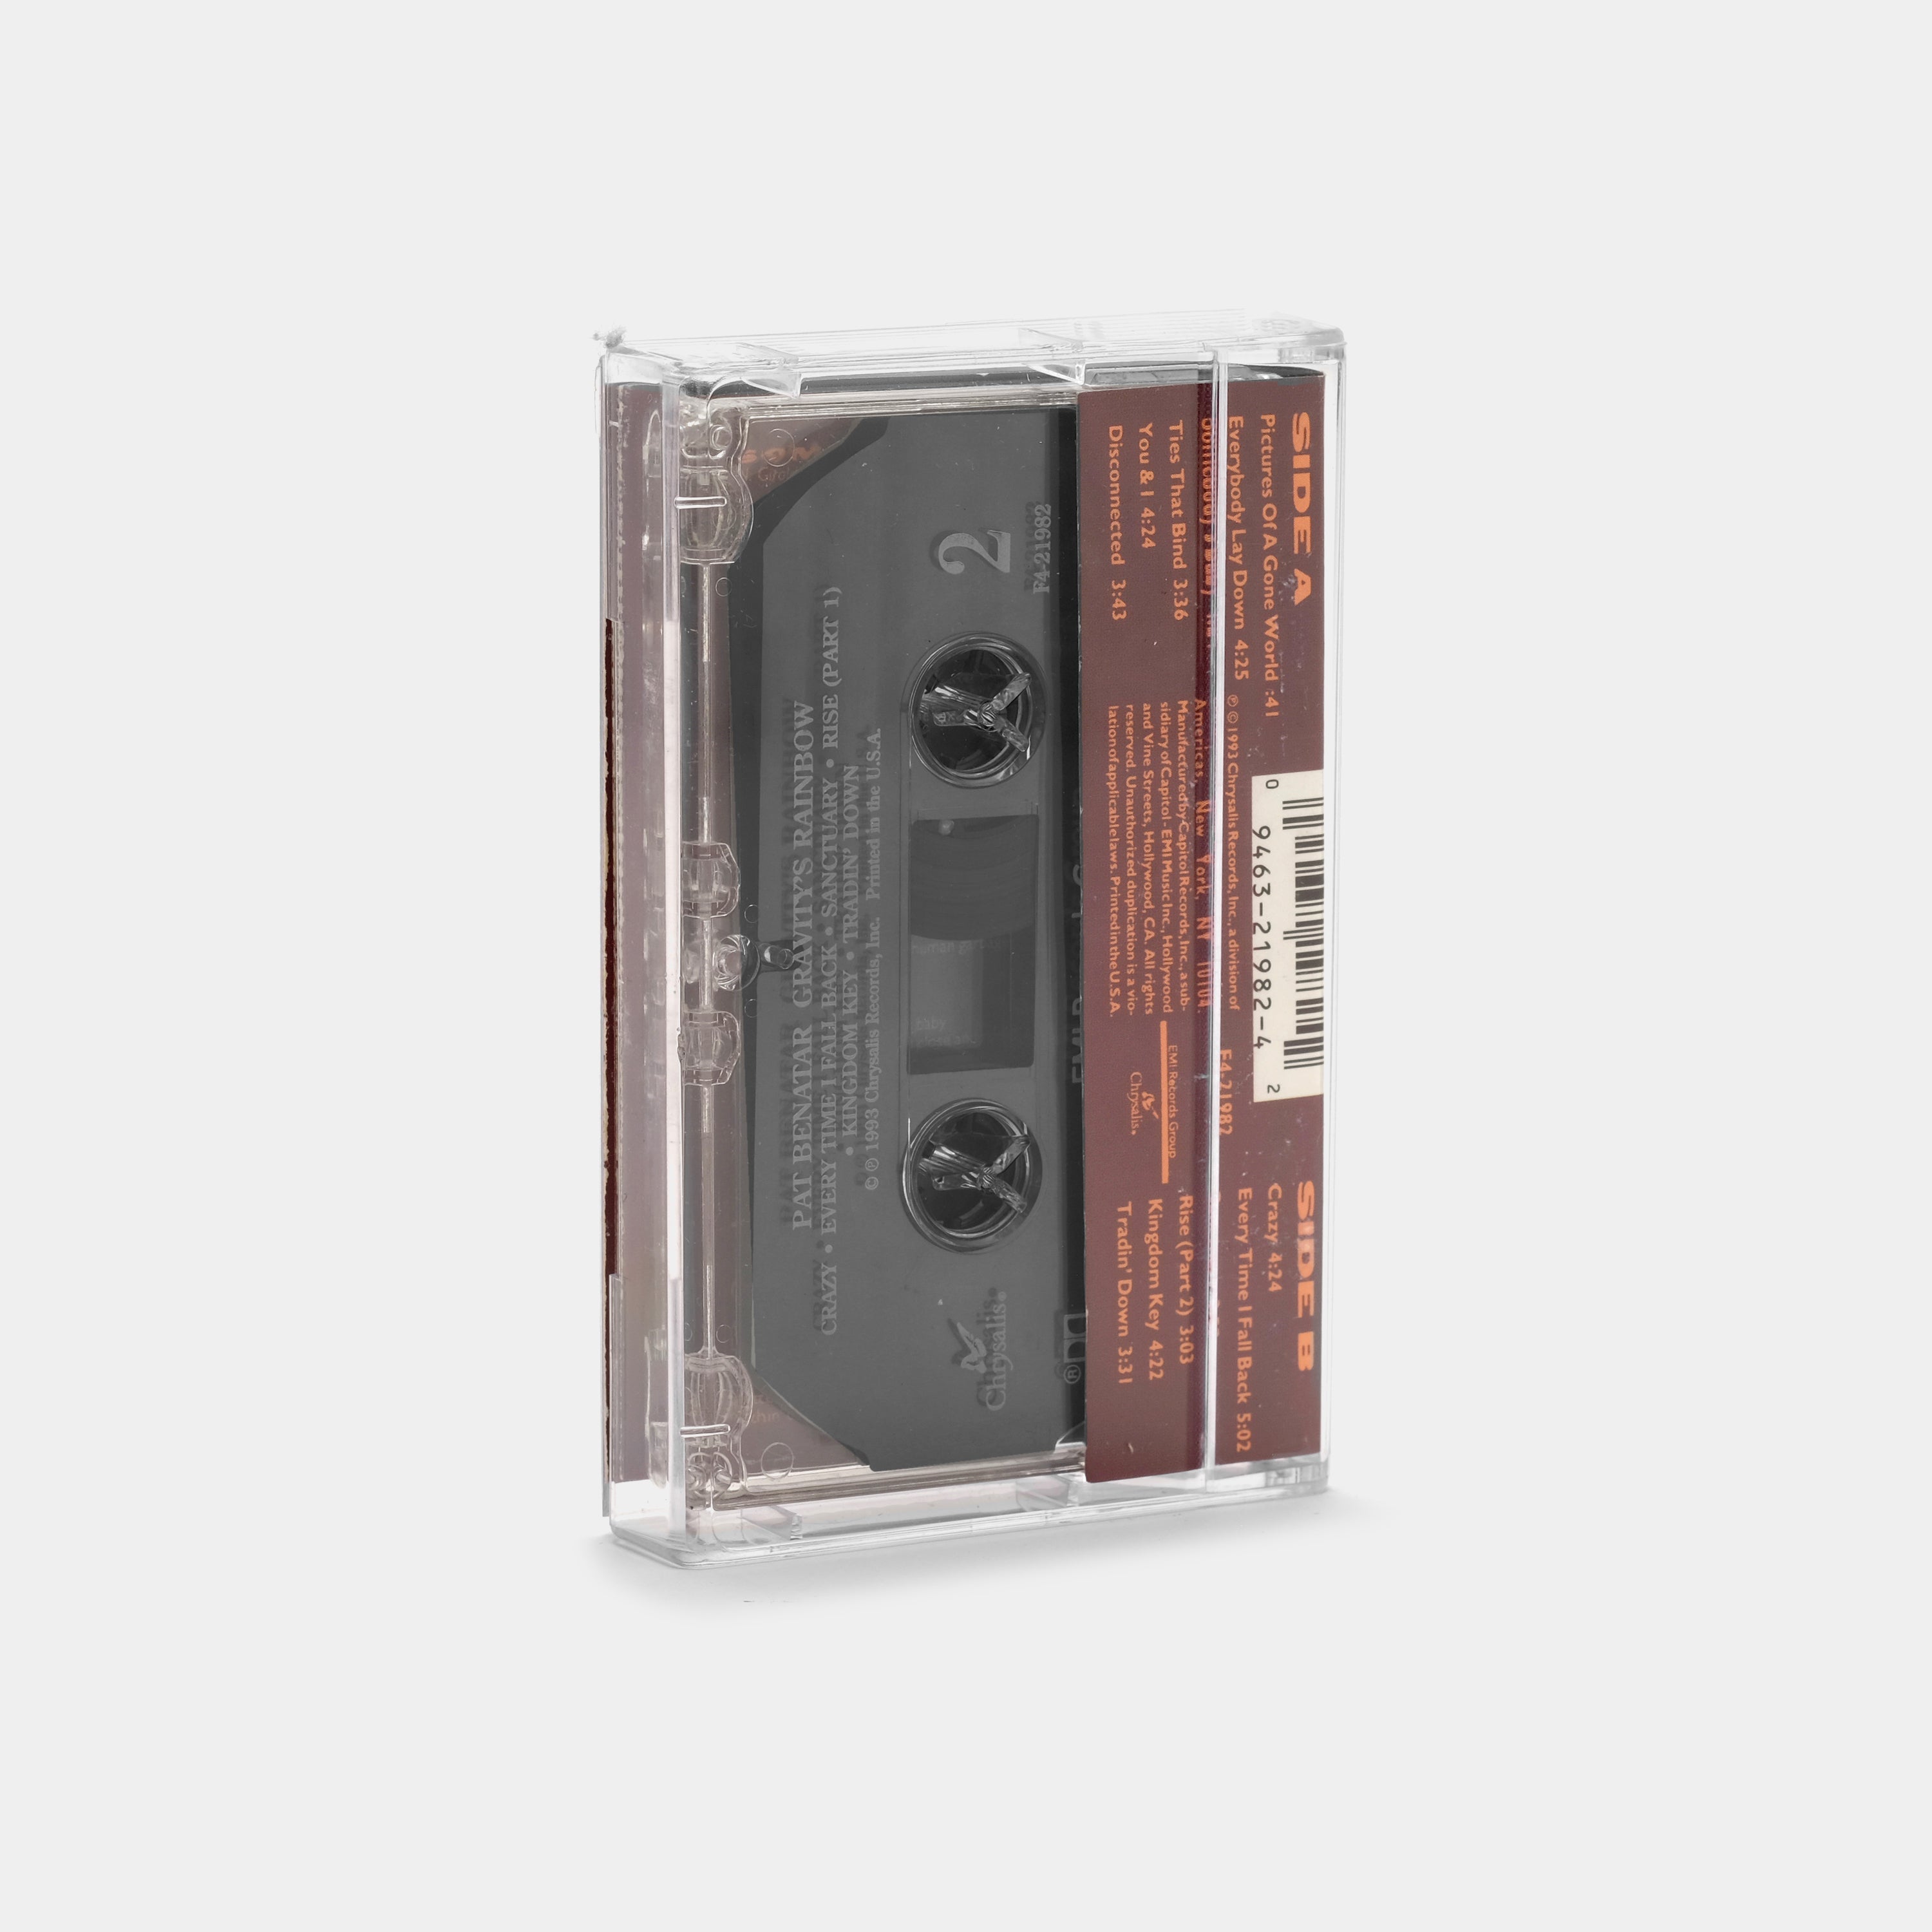 Pat Benatar - Gravity's Rainbow Cassette Tape